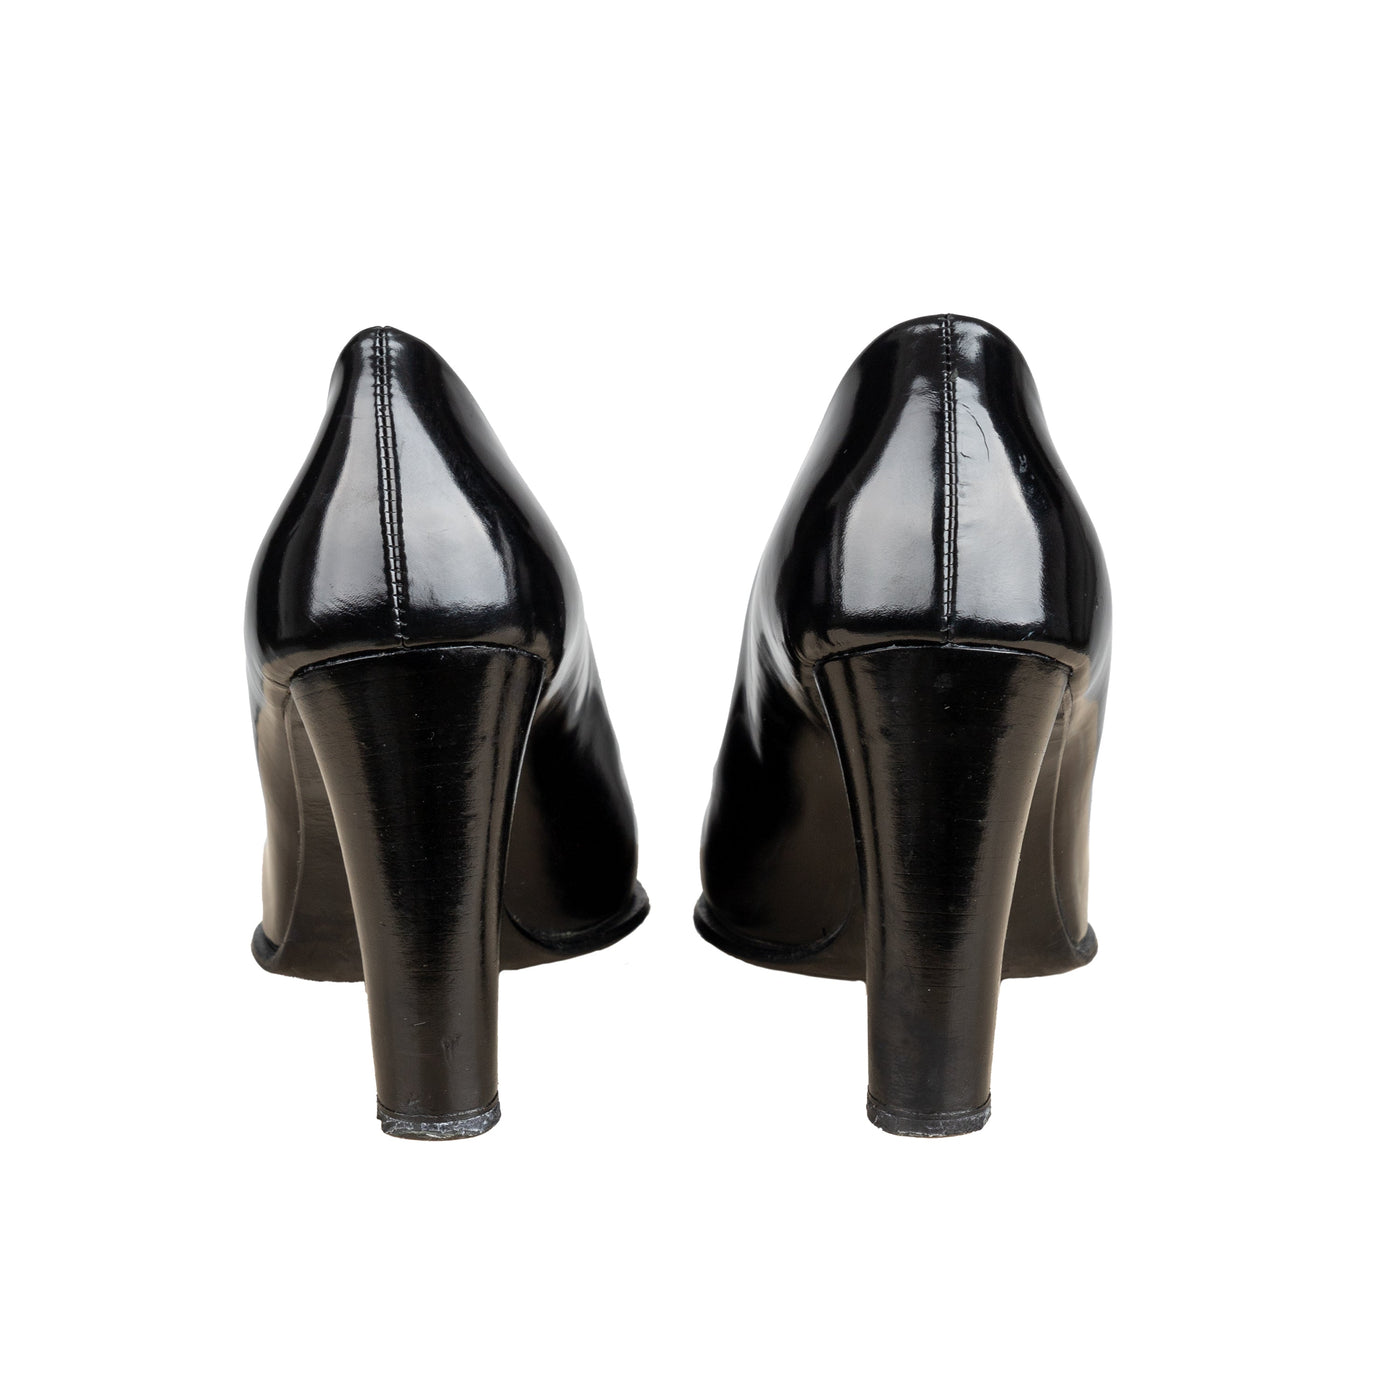 Secondhand Prada Pointed Pump Heels